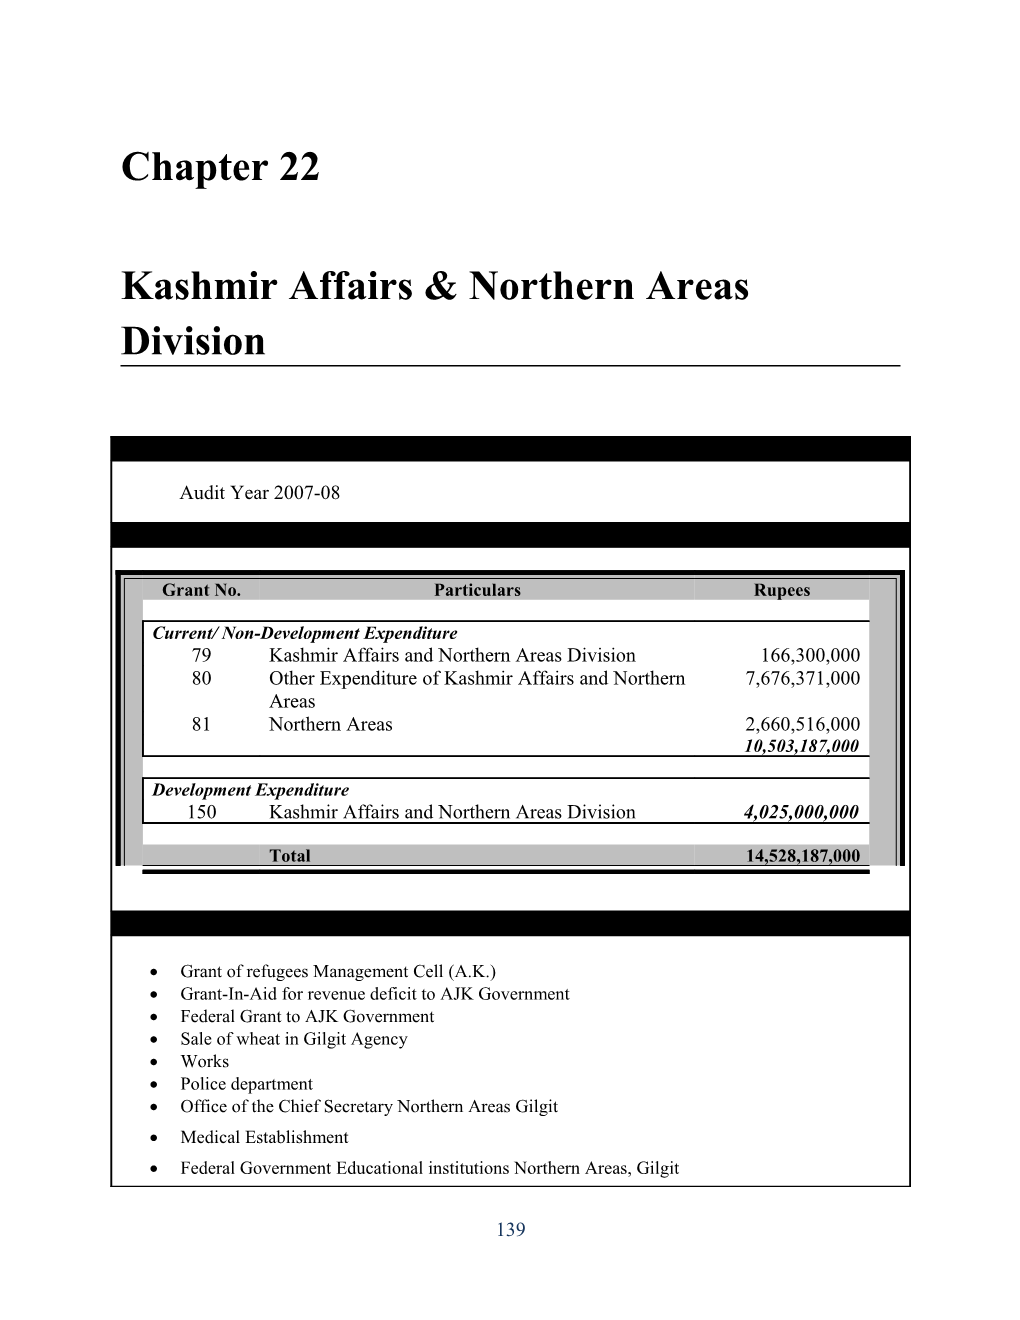 Kashmir Affairs & Northern Areas Division